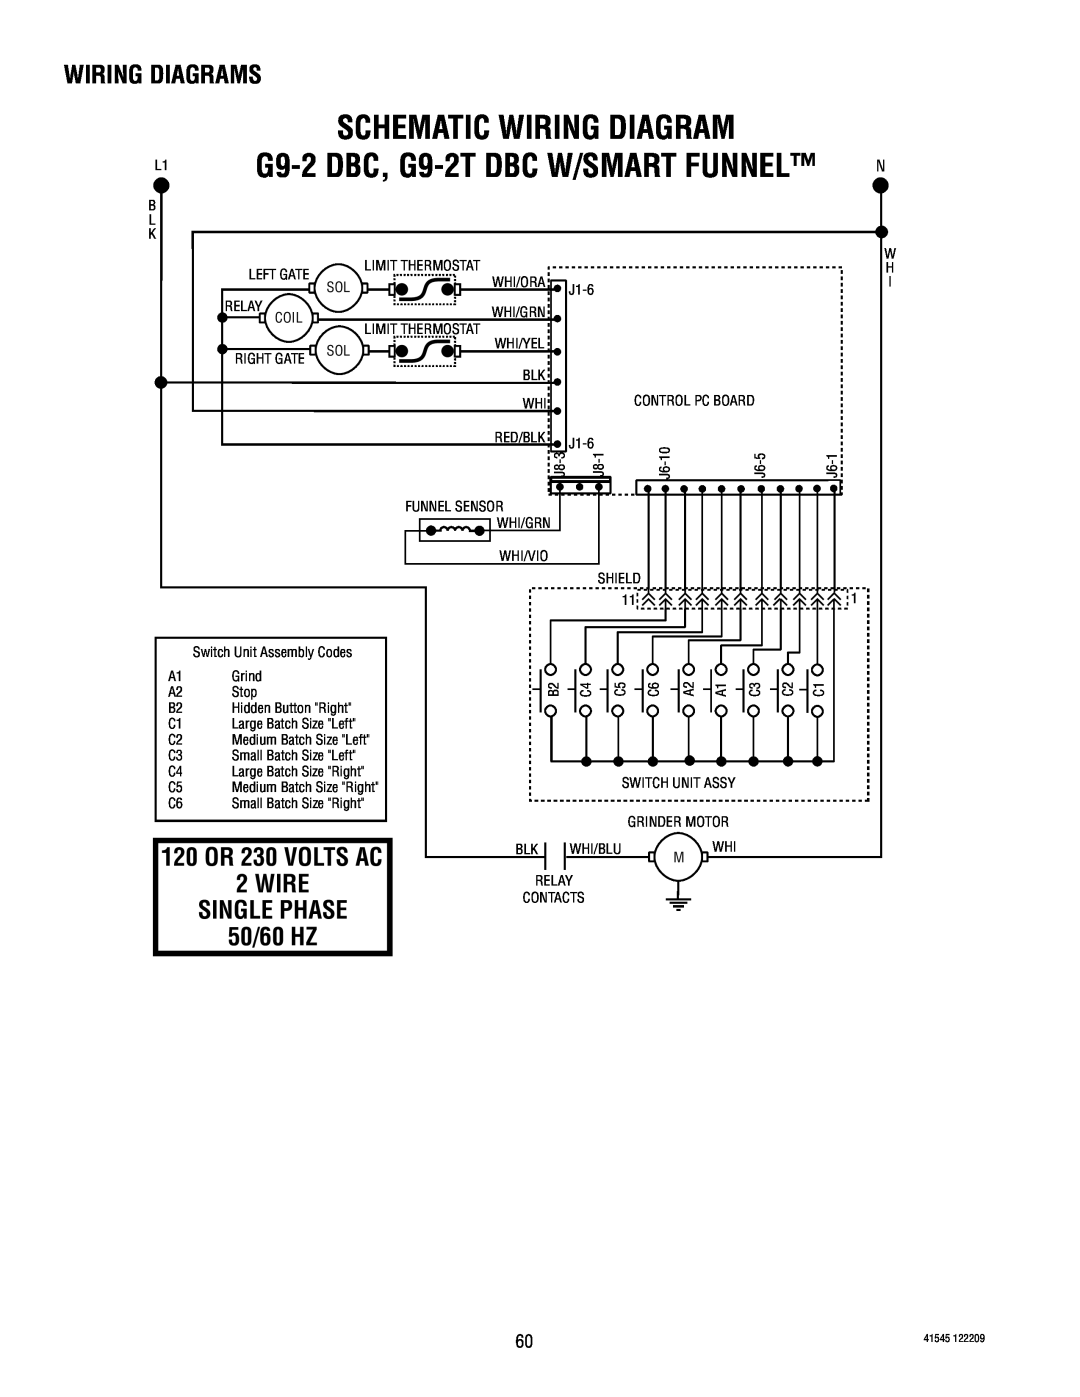 Bunn LPG-2 Schematic Wiring Diagram, G9-2 DBC, G9-2T DBC W/SMART FUNNEL, Wiring Diagrams, WIRE SINGLE PHASE 50/60 HZ 